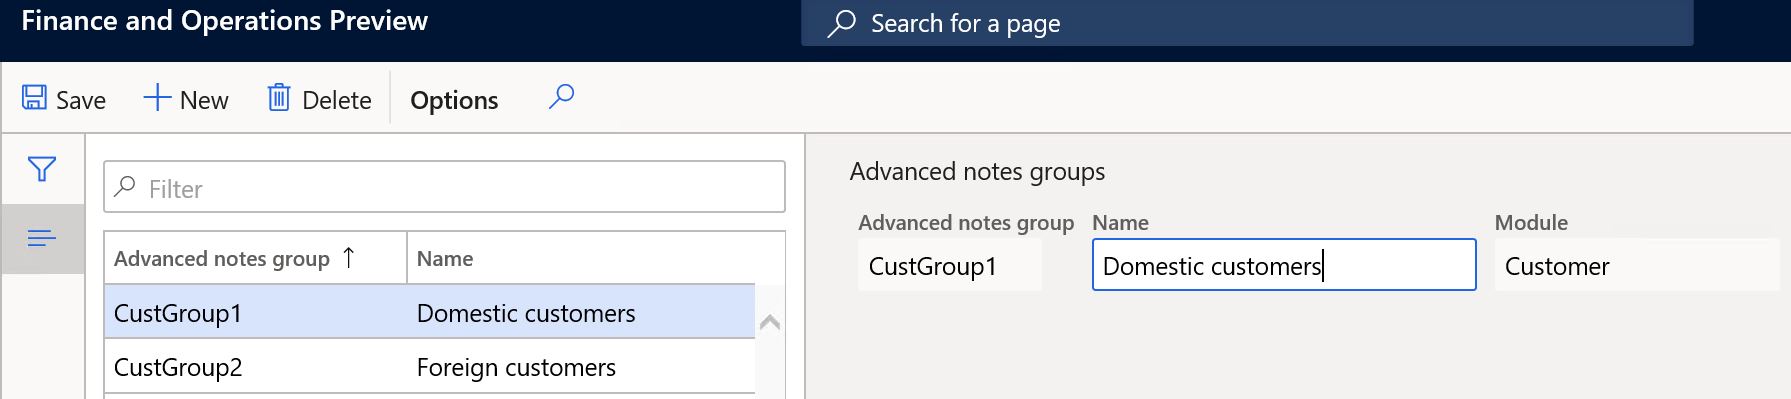 Setup of customer advanced notes groups.